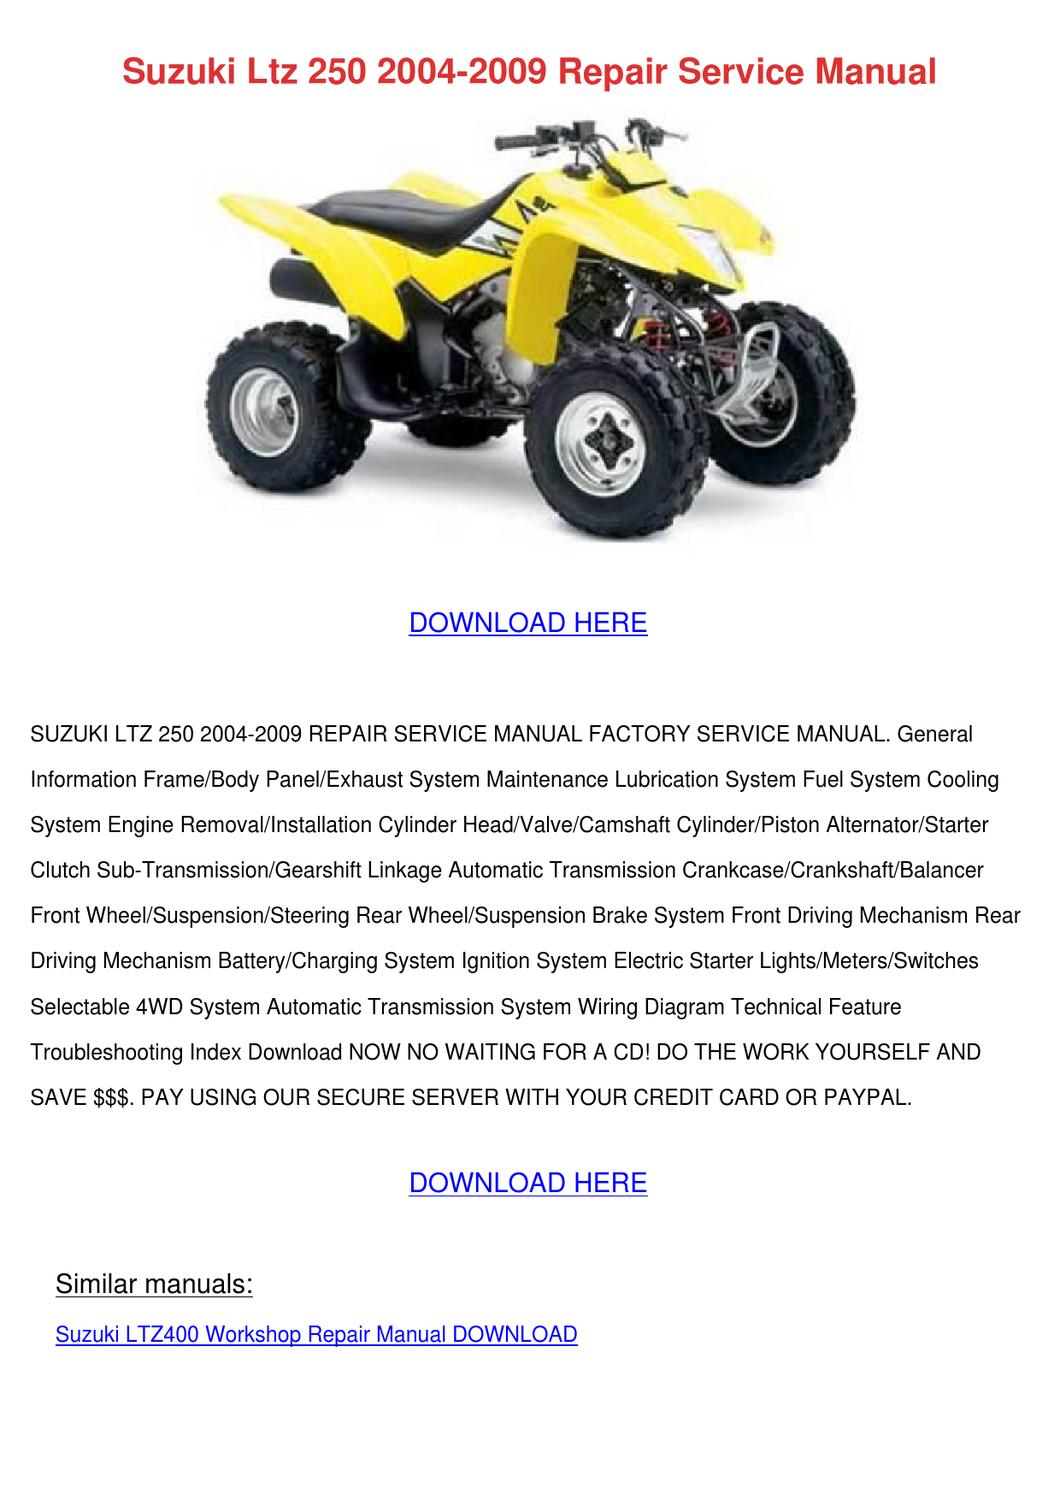 Suzuki Ltz 400 Manual Download